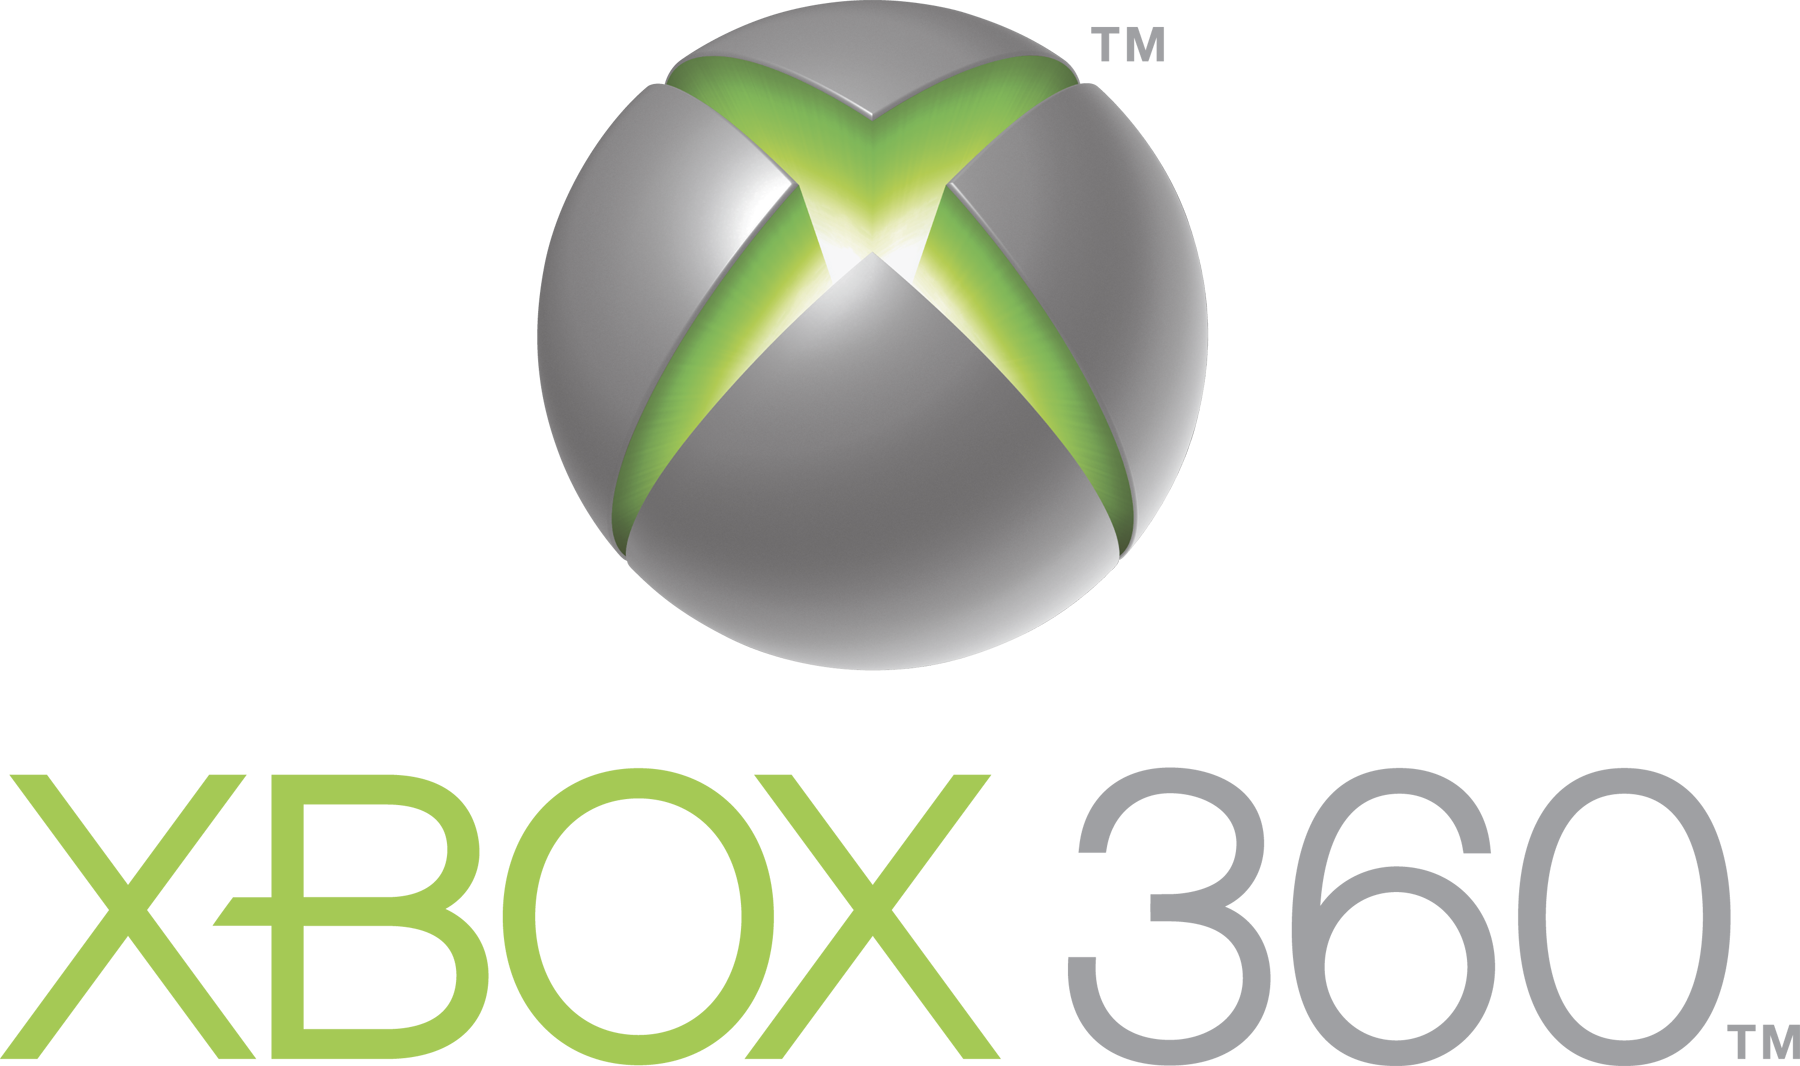 xbox360-logo